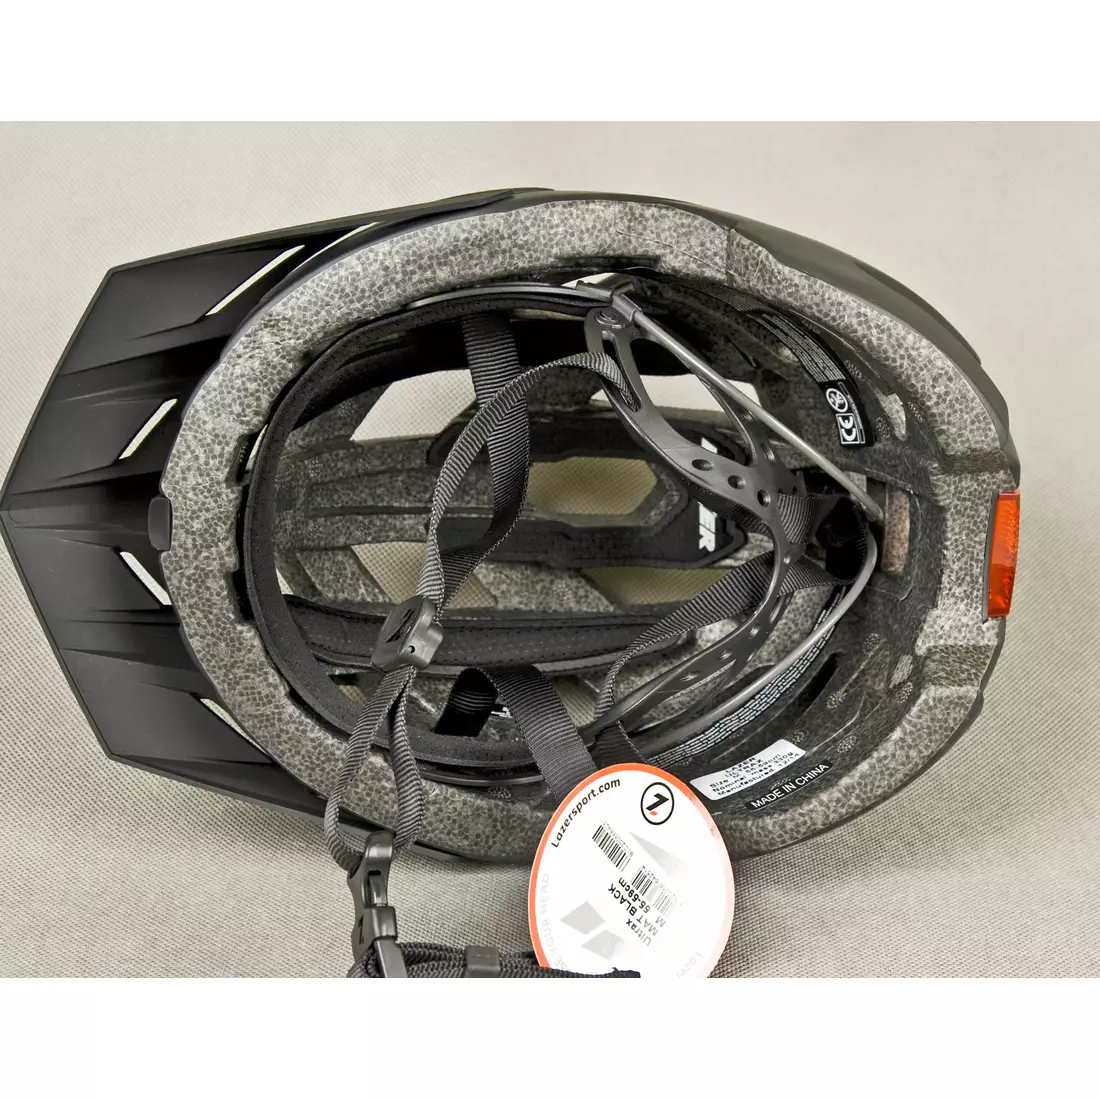 Casca de bicicleta LAZER - ULTRAX MTB, culoare: negru mat